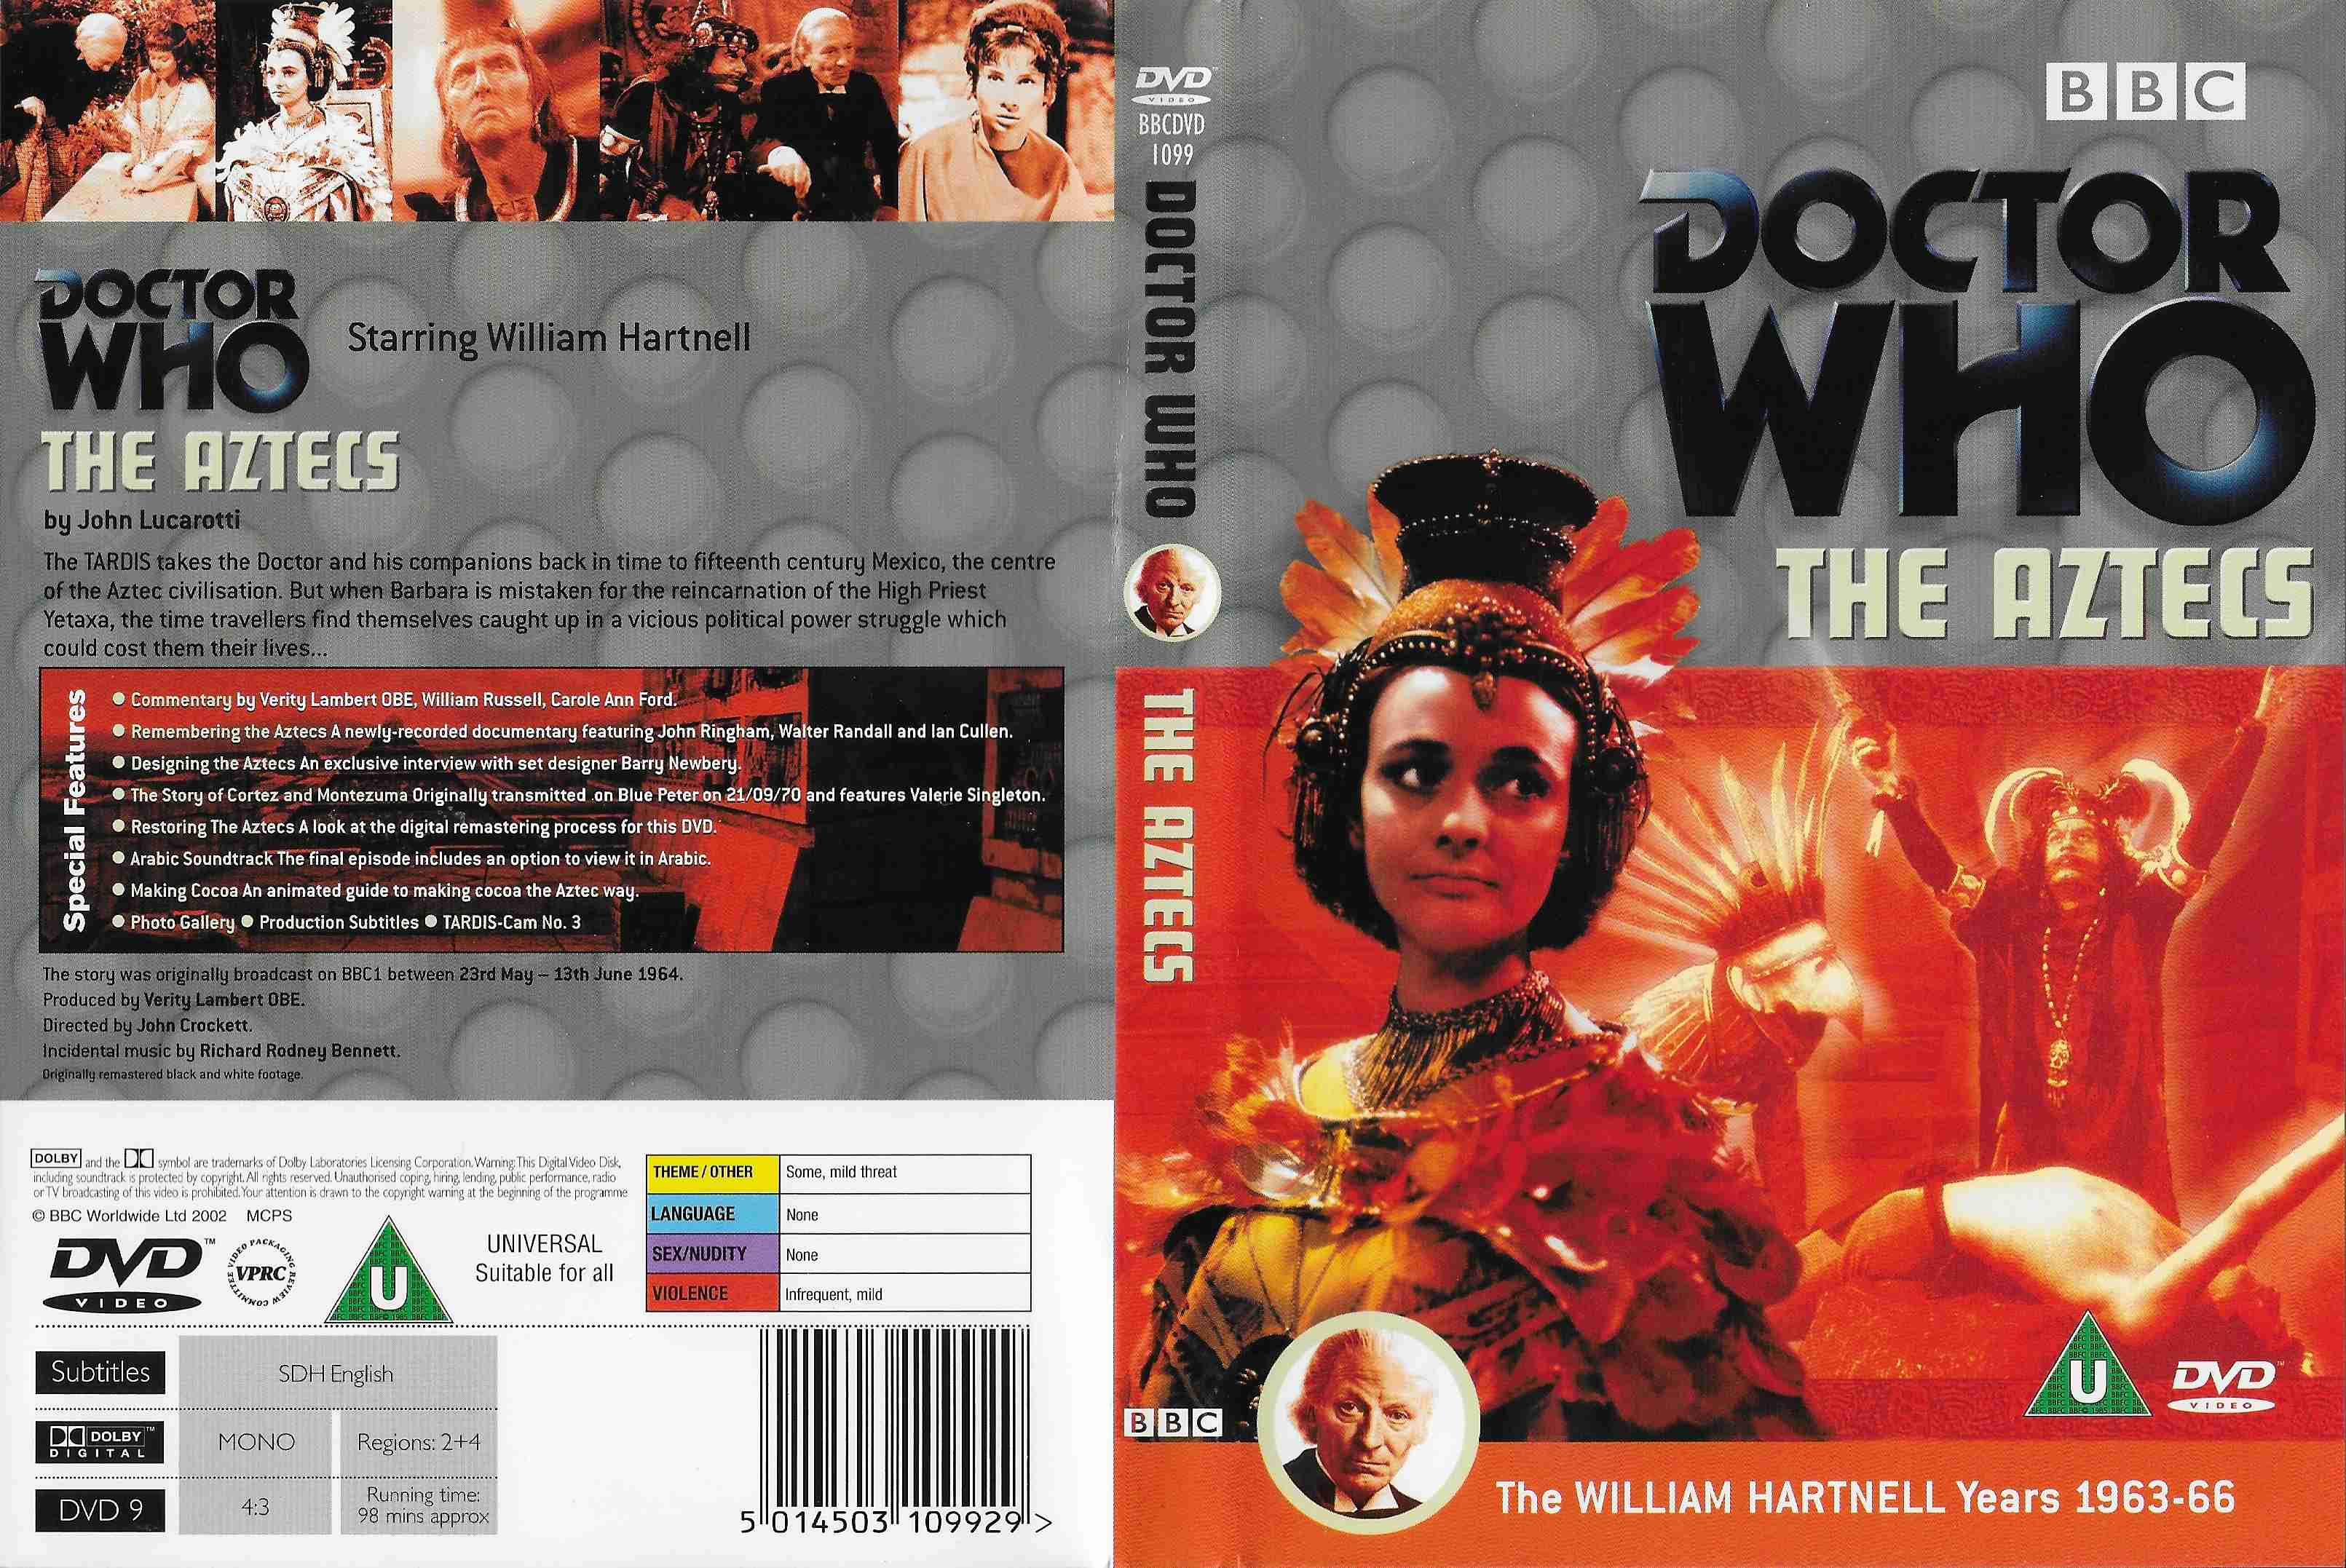 Back cover of BBCDVD 1099